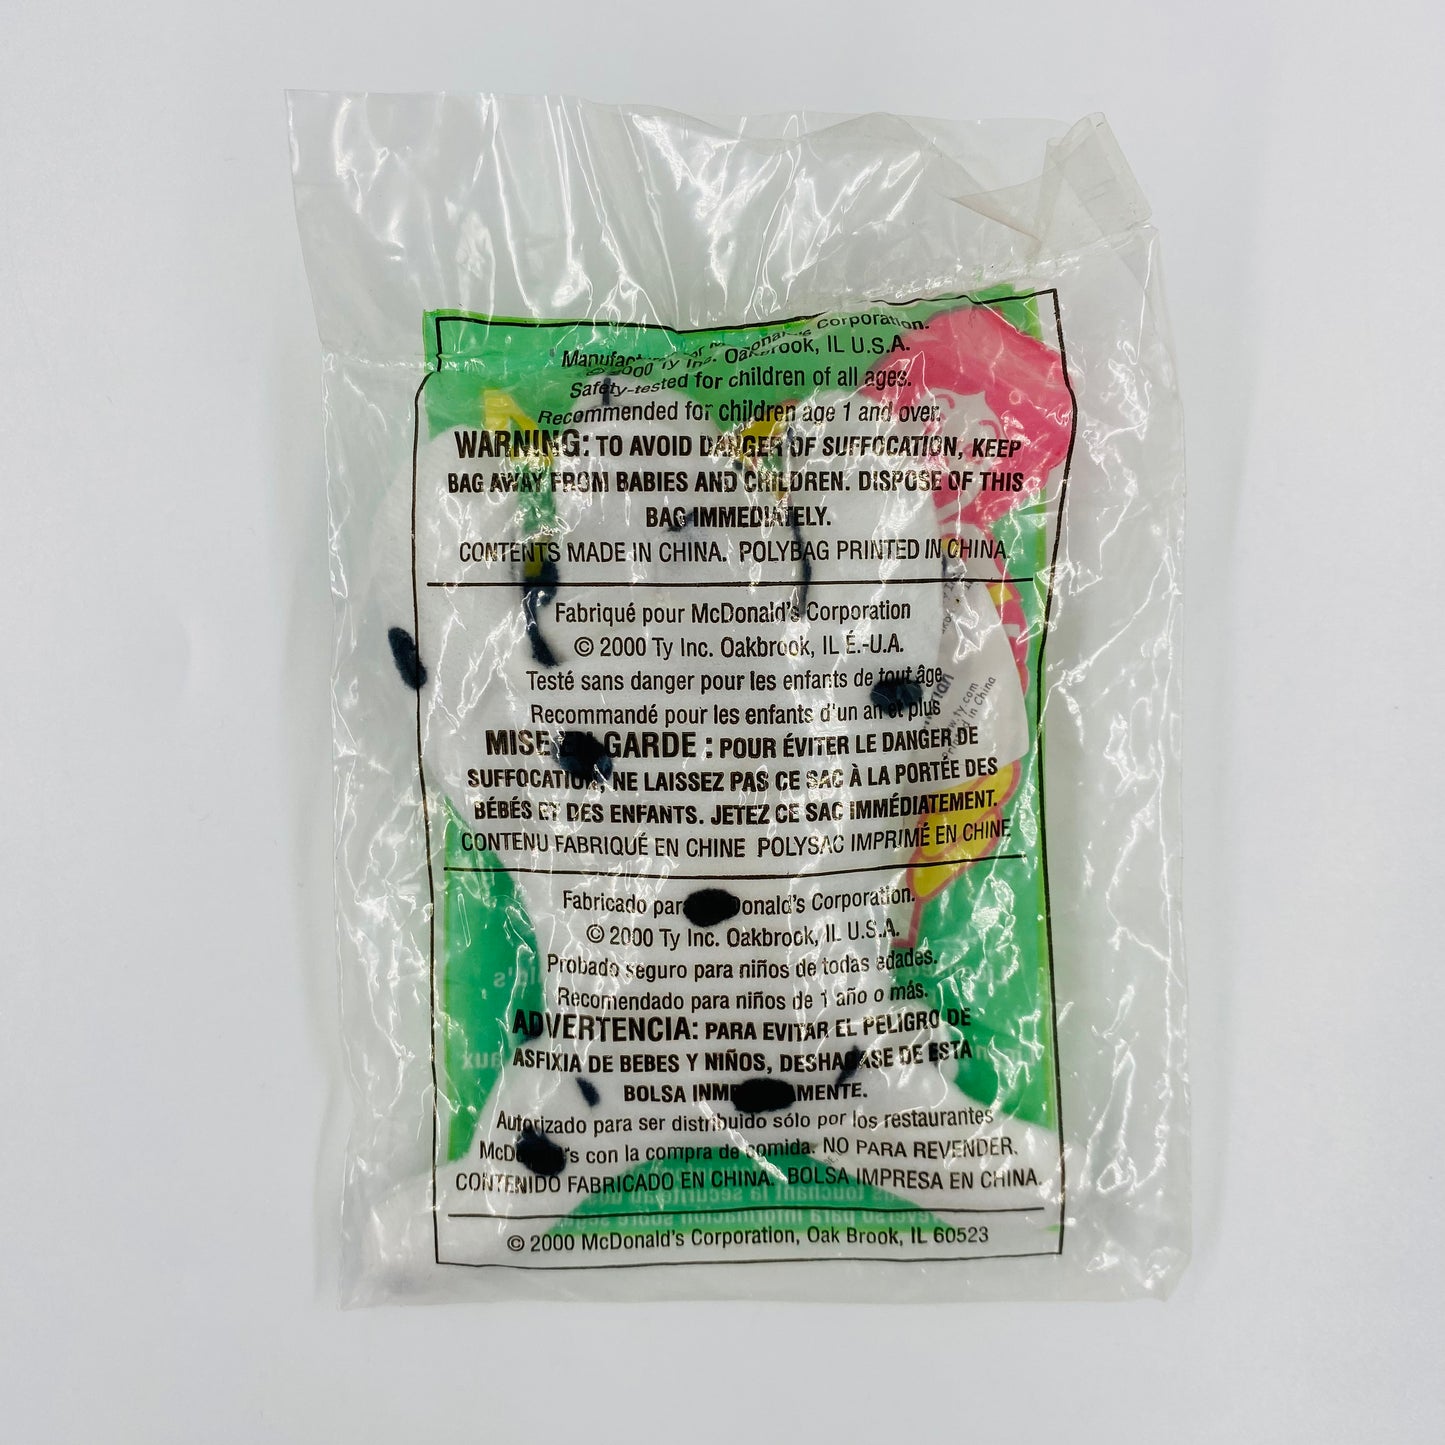 Teenie Beanie Babies Dotty the Dalmatian McDonald's Happy Meal bean bag plush toy animal (2000) bagged